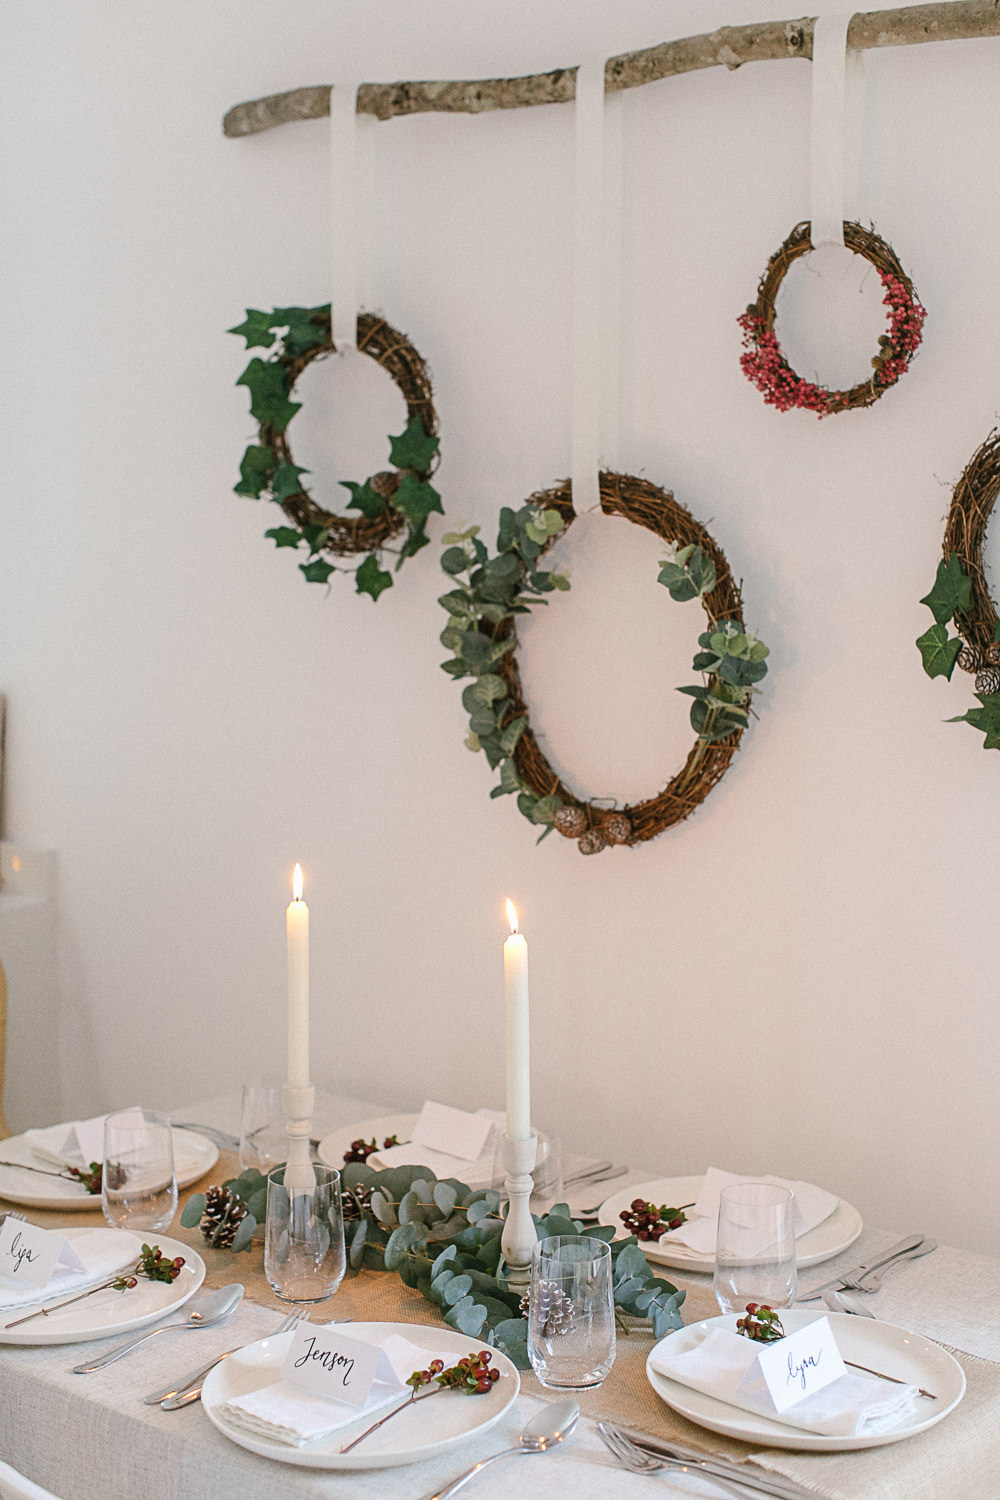 DIY festive wreath installation and Christmas tablescape